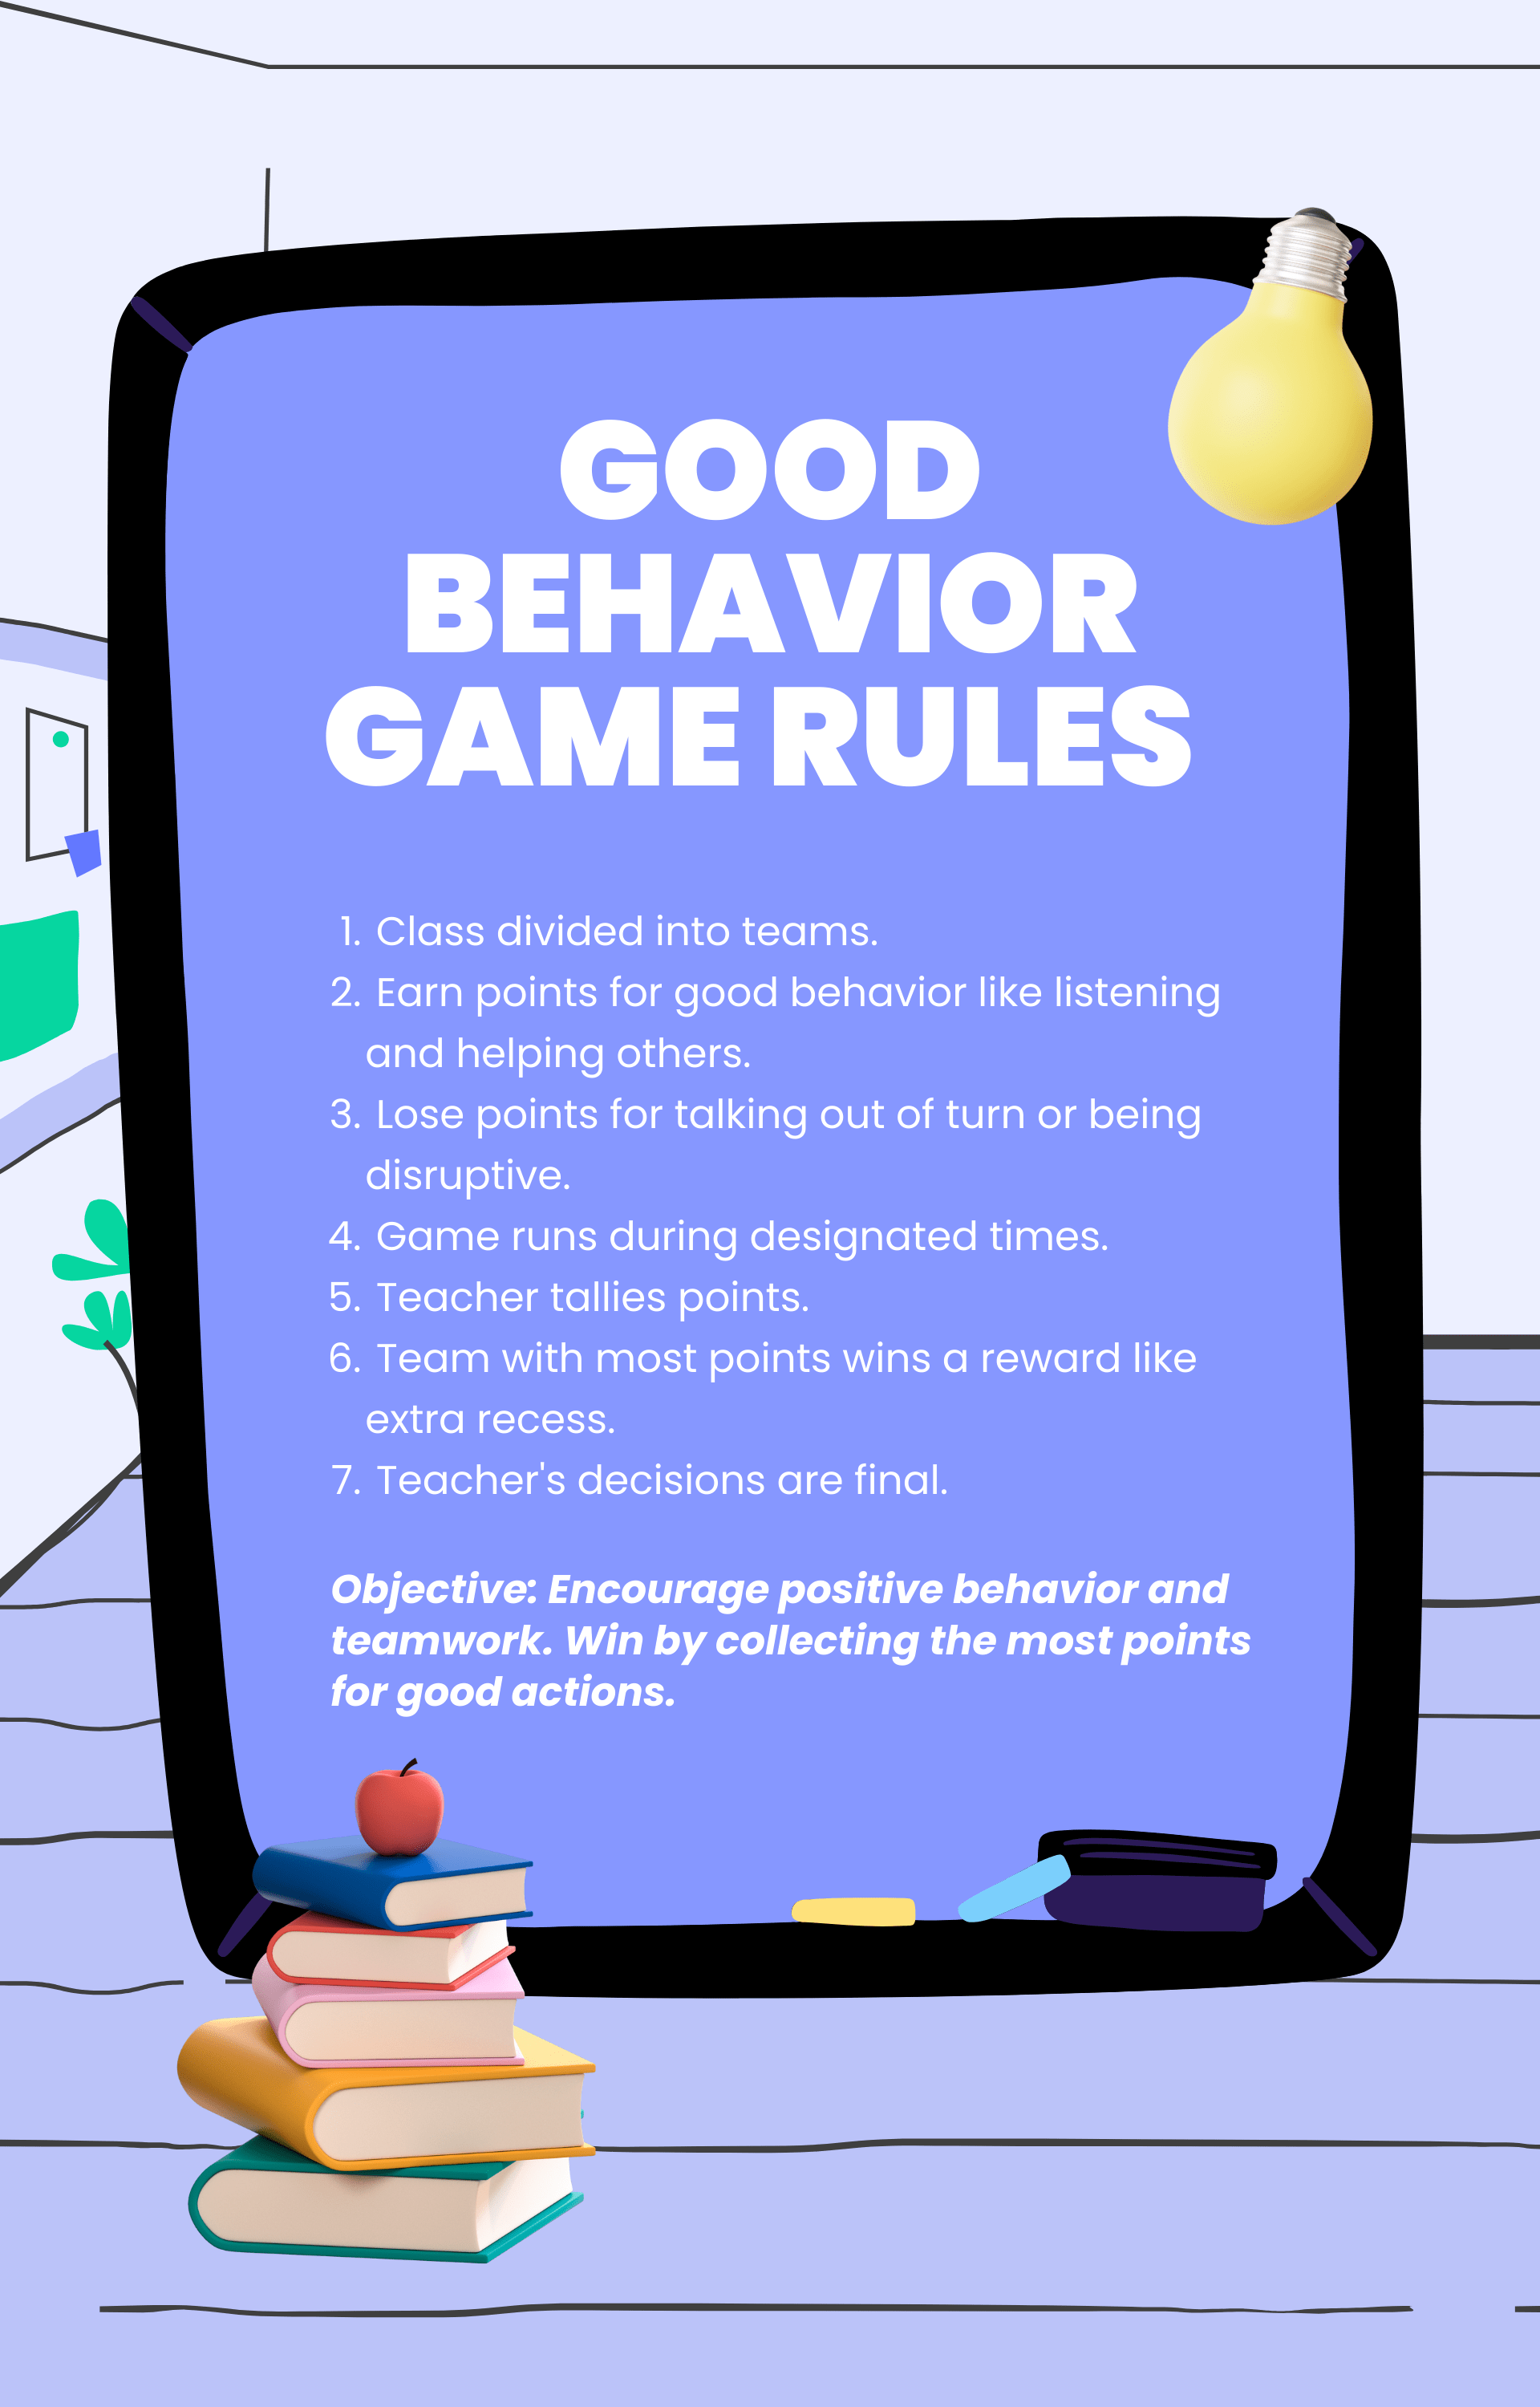 Good behavior game rules